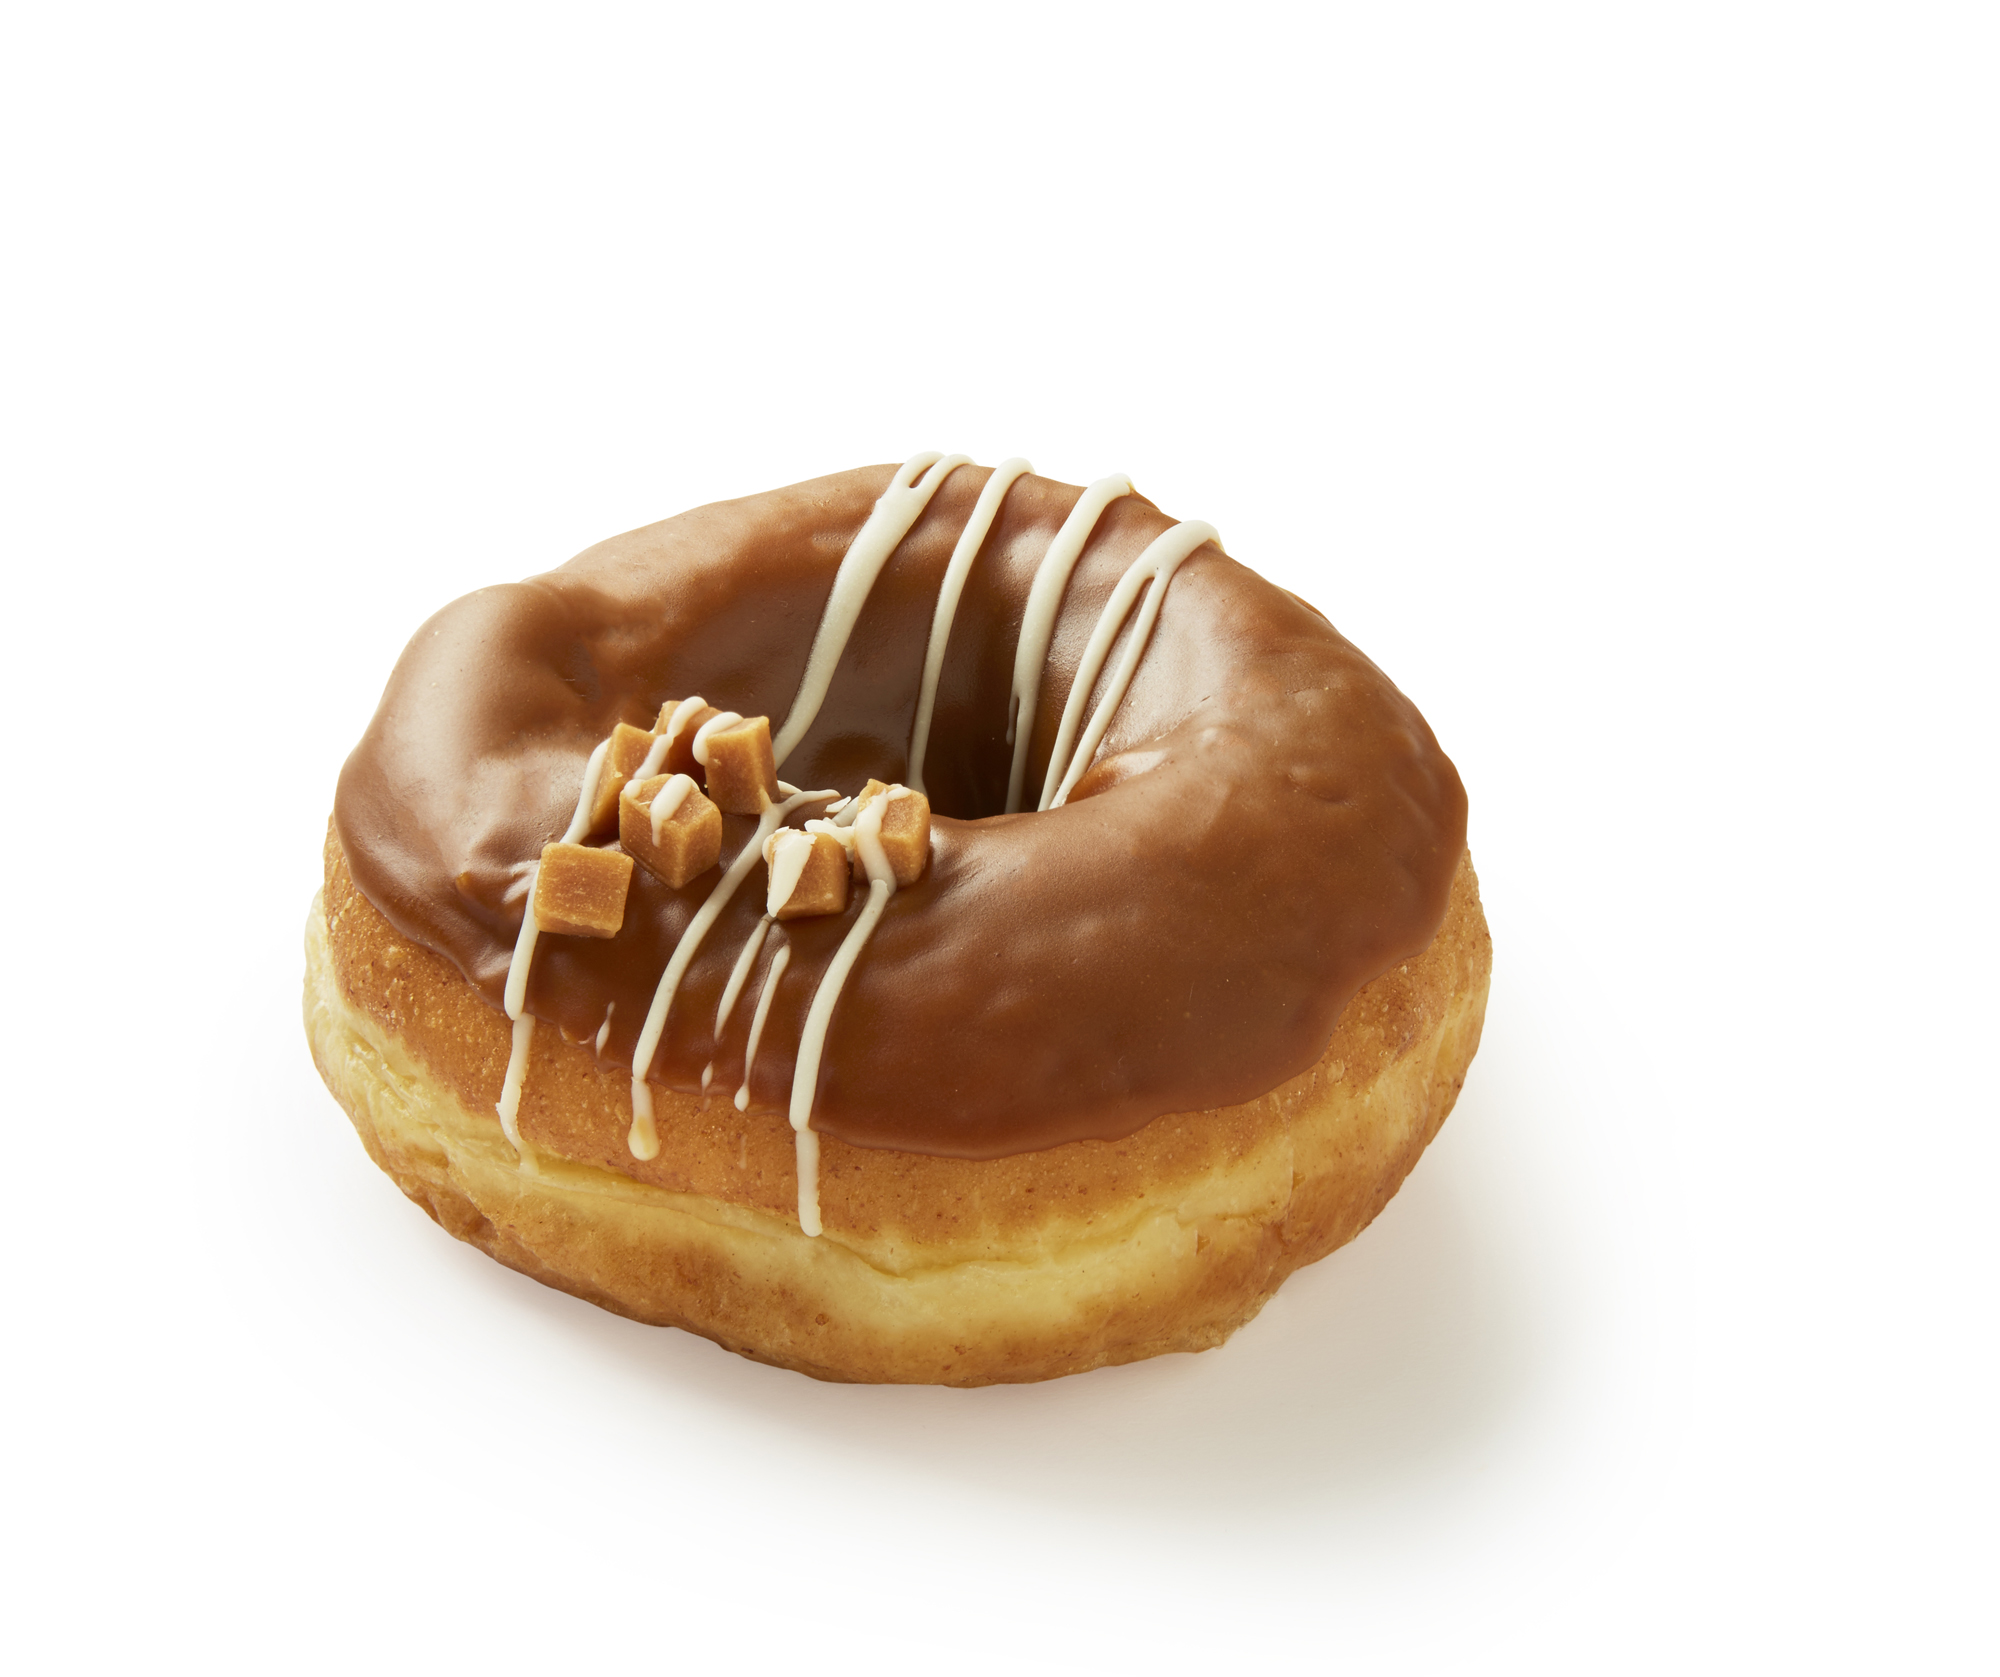 Toffee apple ring doughnut (Greggs/PA)